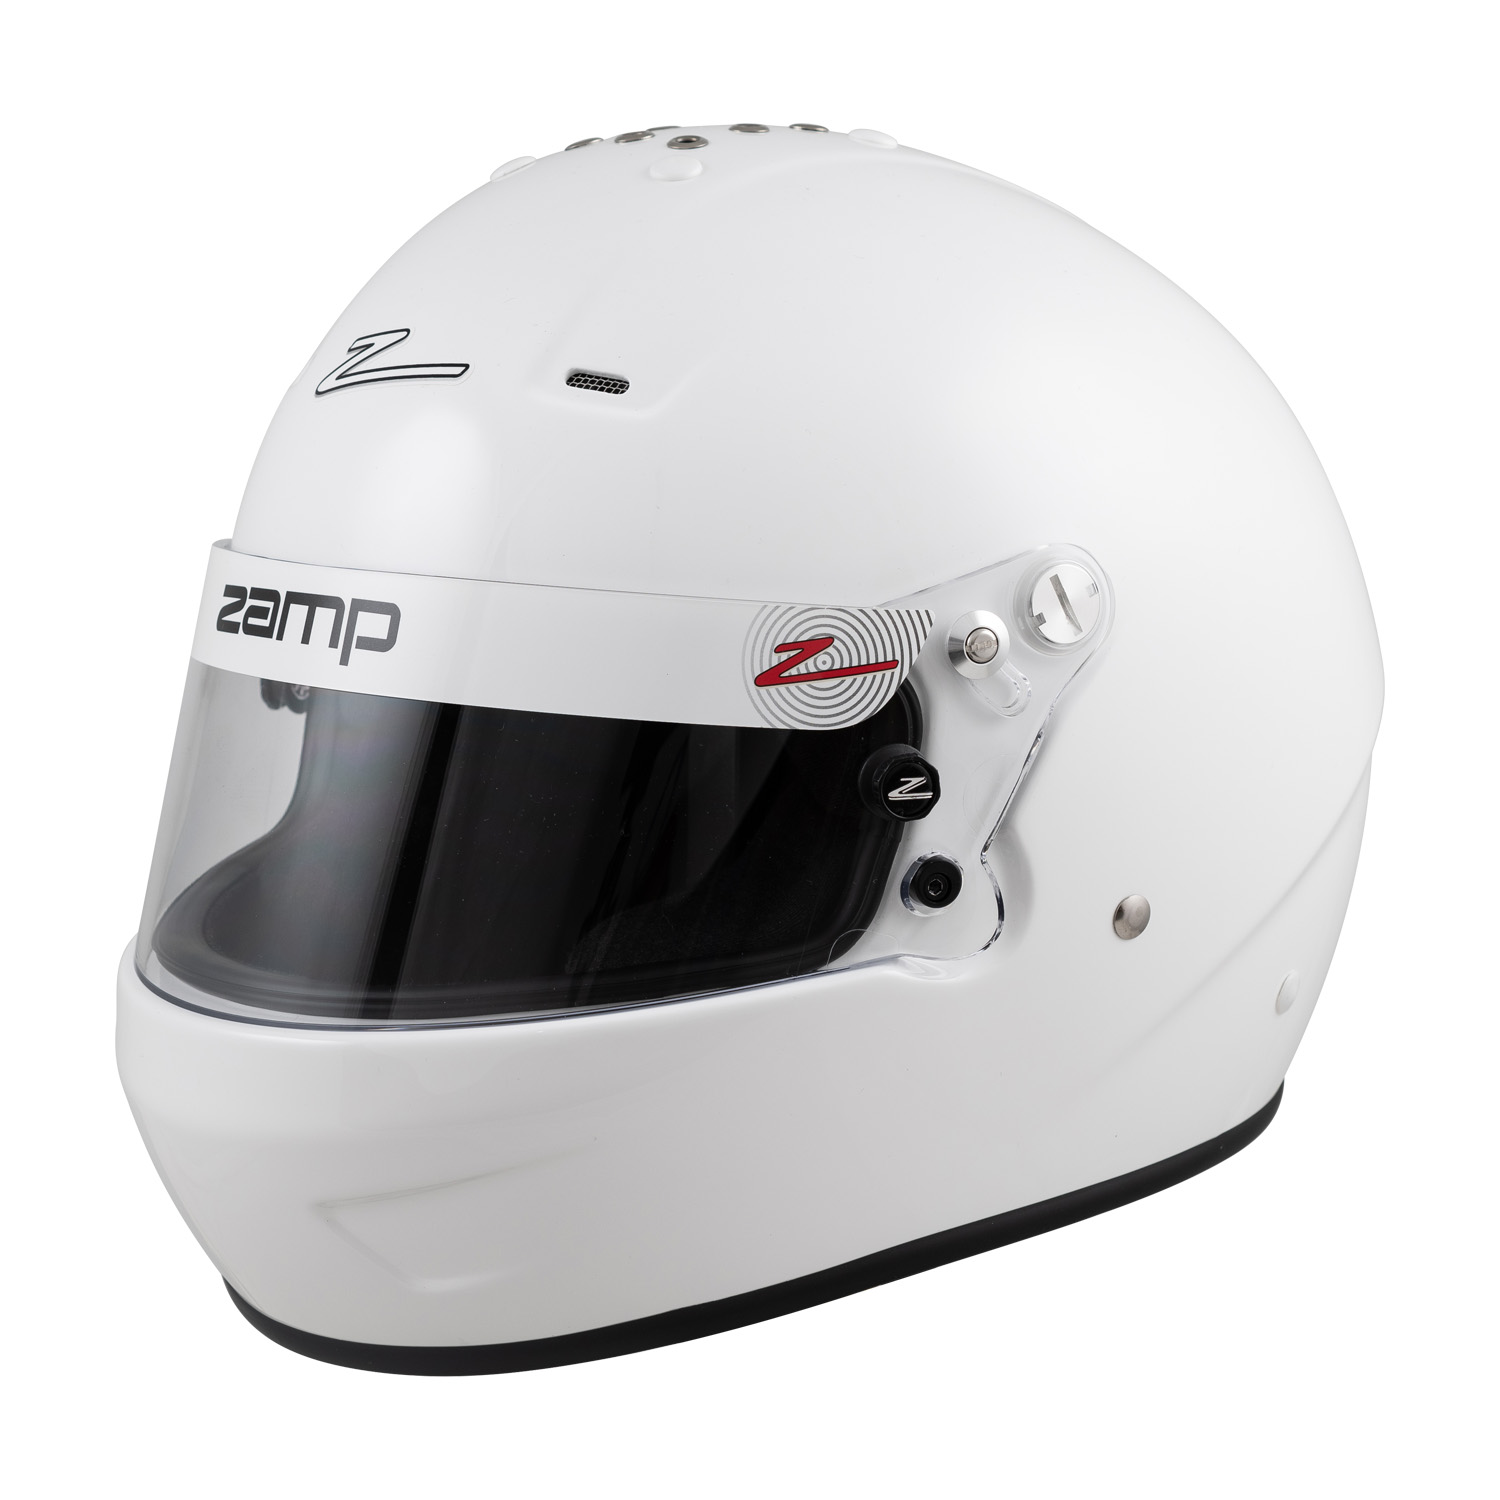 Orange Shield Pivot Kit to fit ZAMP RZ Series Helmets 4pc Kit Anodized 